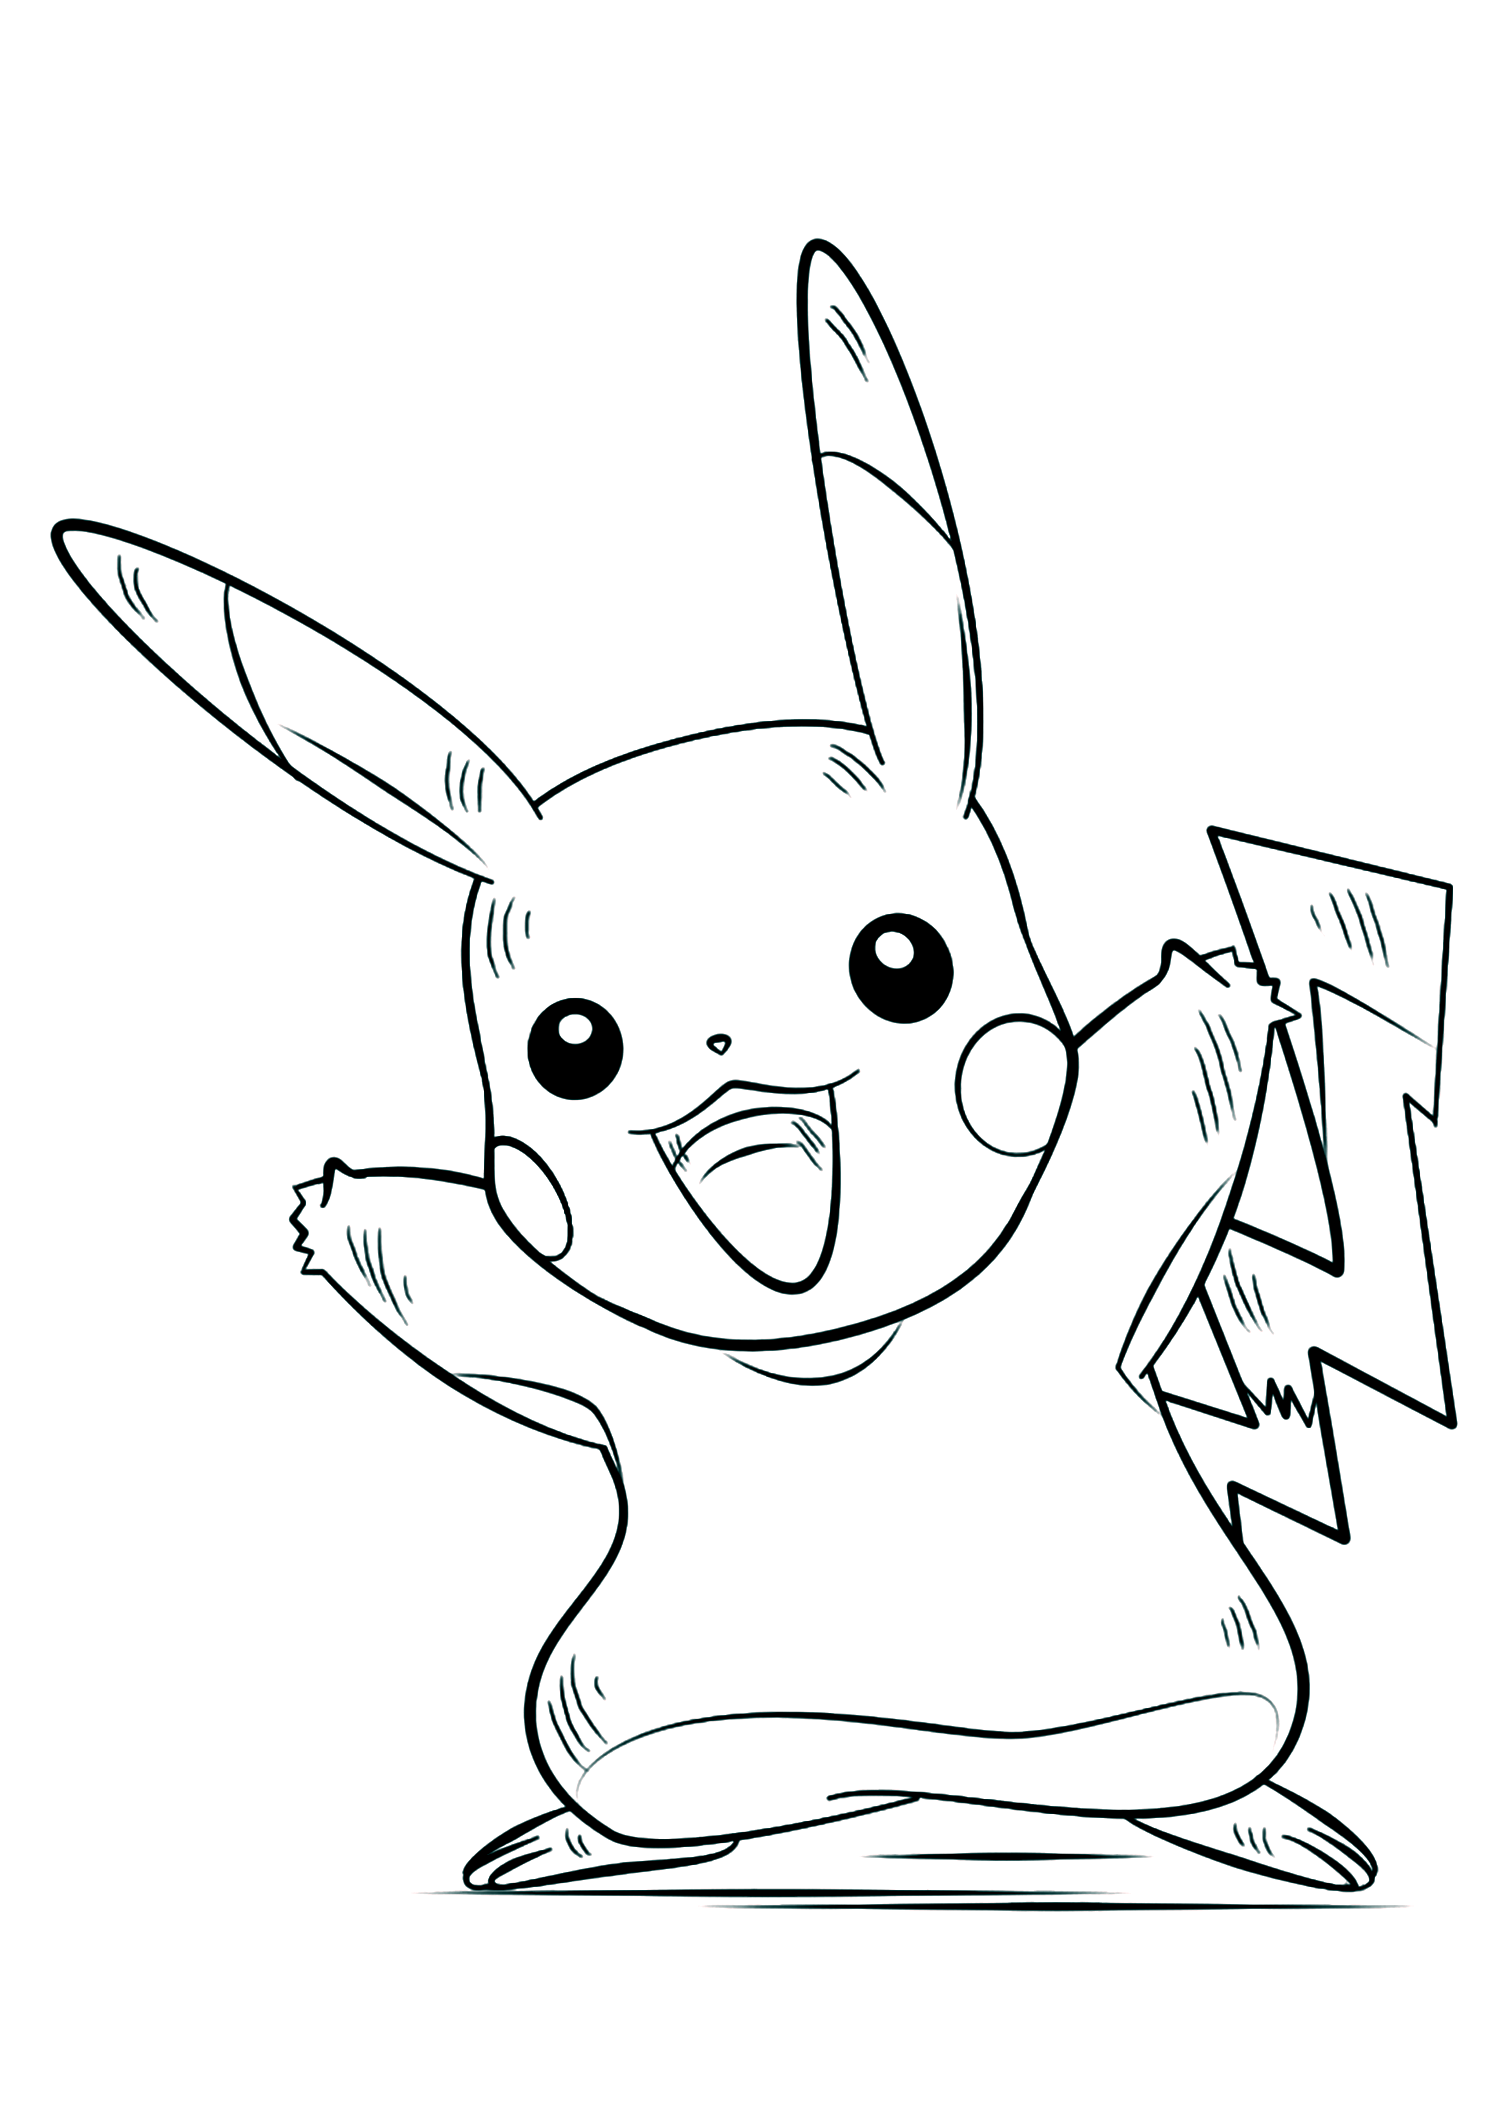 <b>Pikachu</b> (nº 25): Pokémon de la Generación I